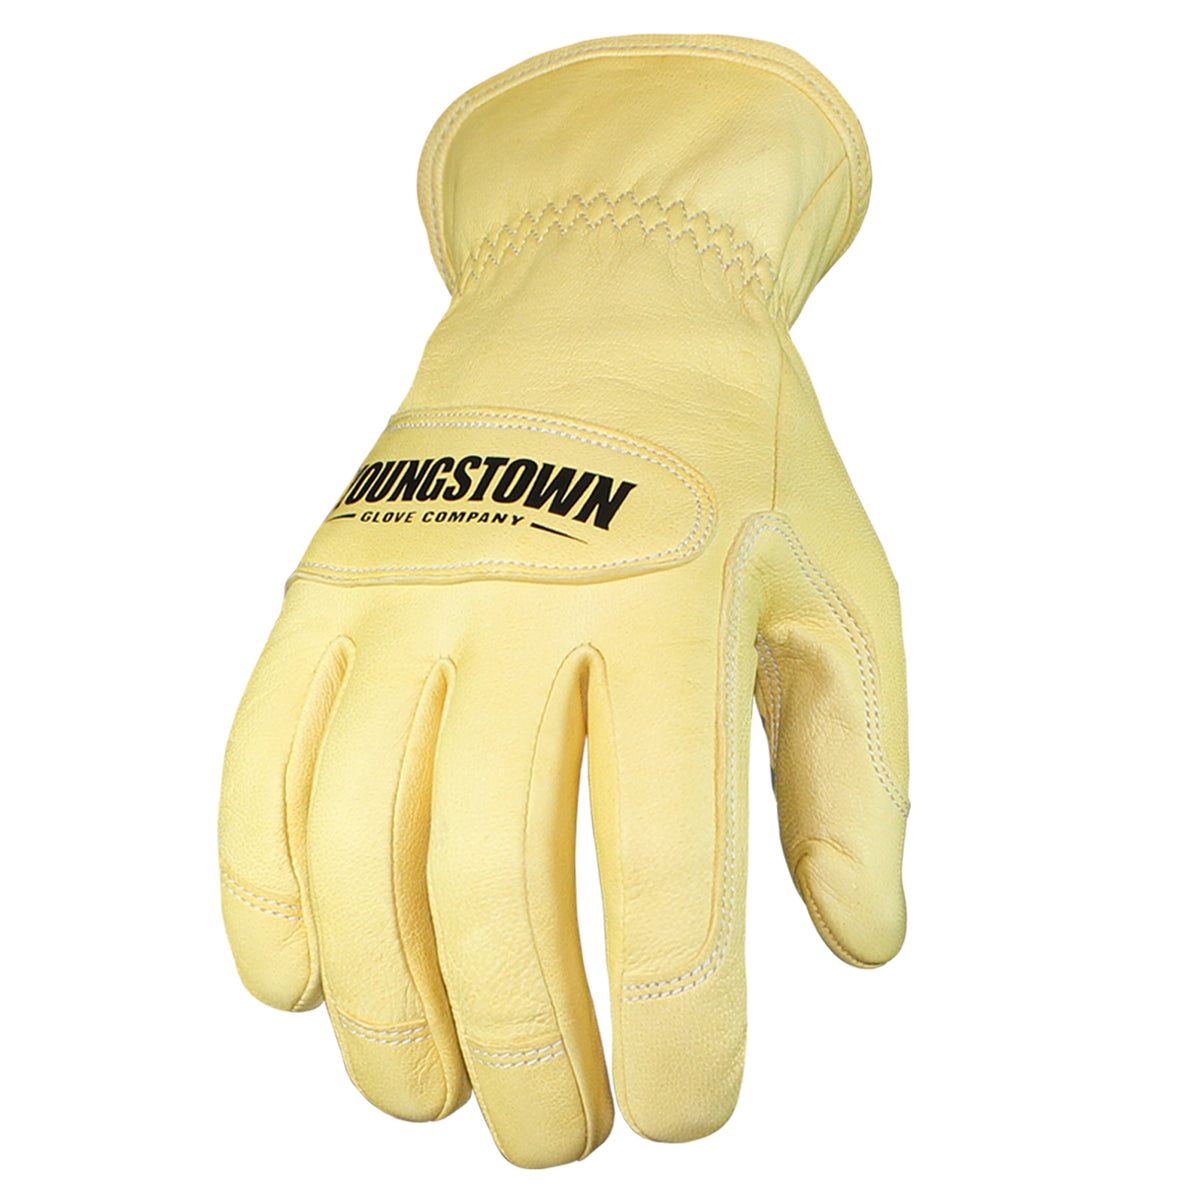 FIRM GRIP General Purpose Medium Glove, Gray/Yellow